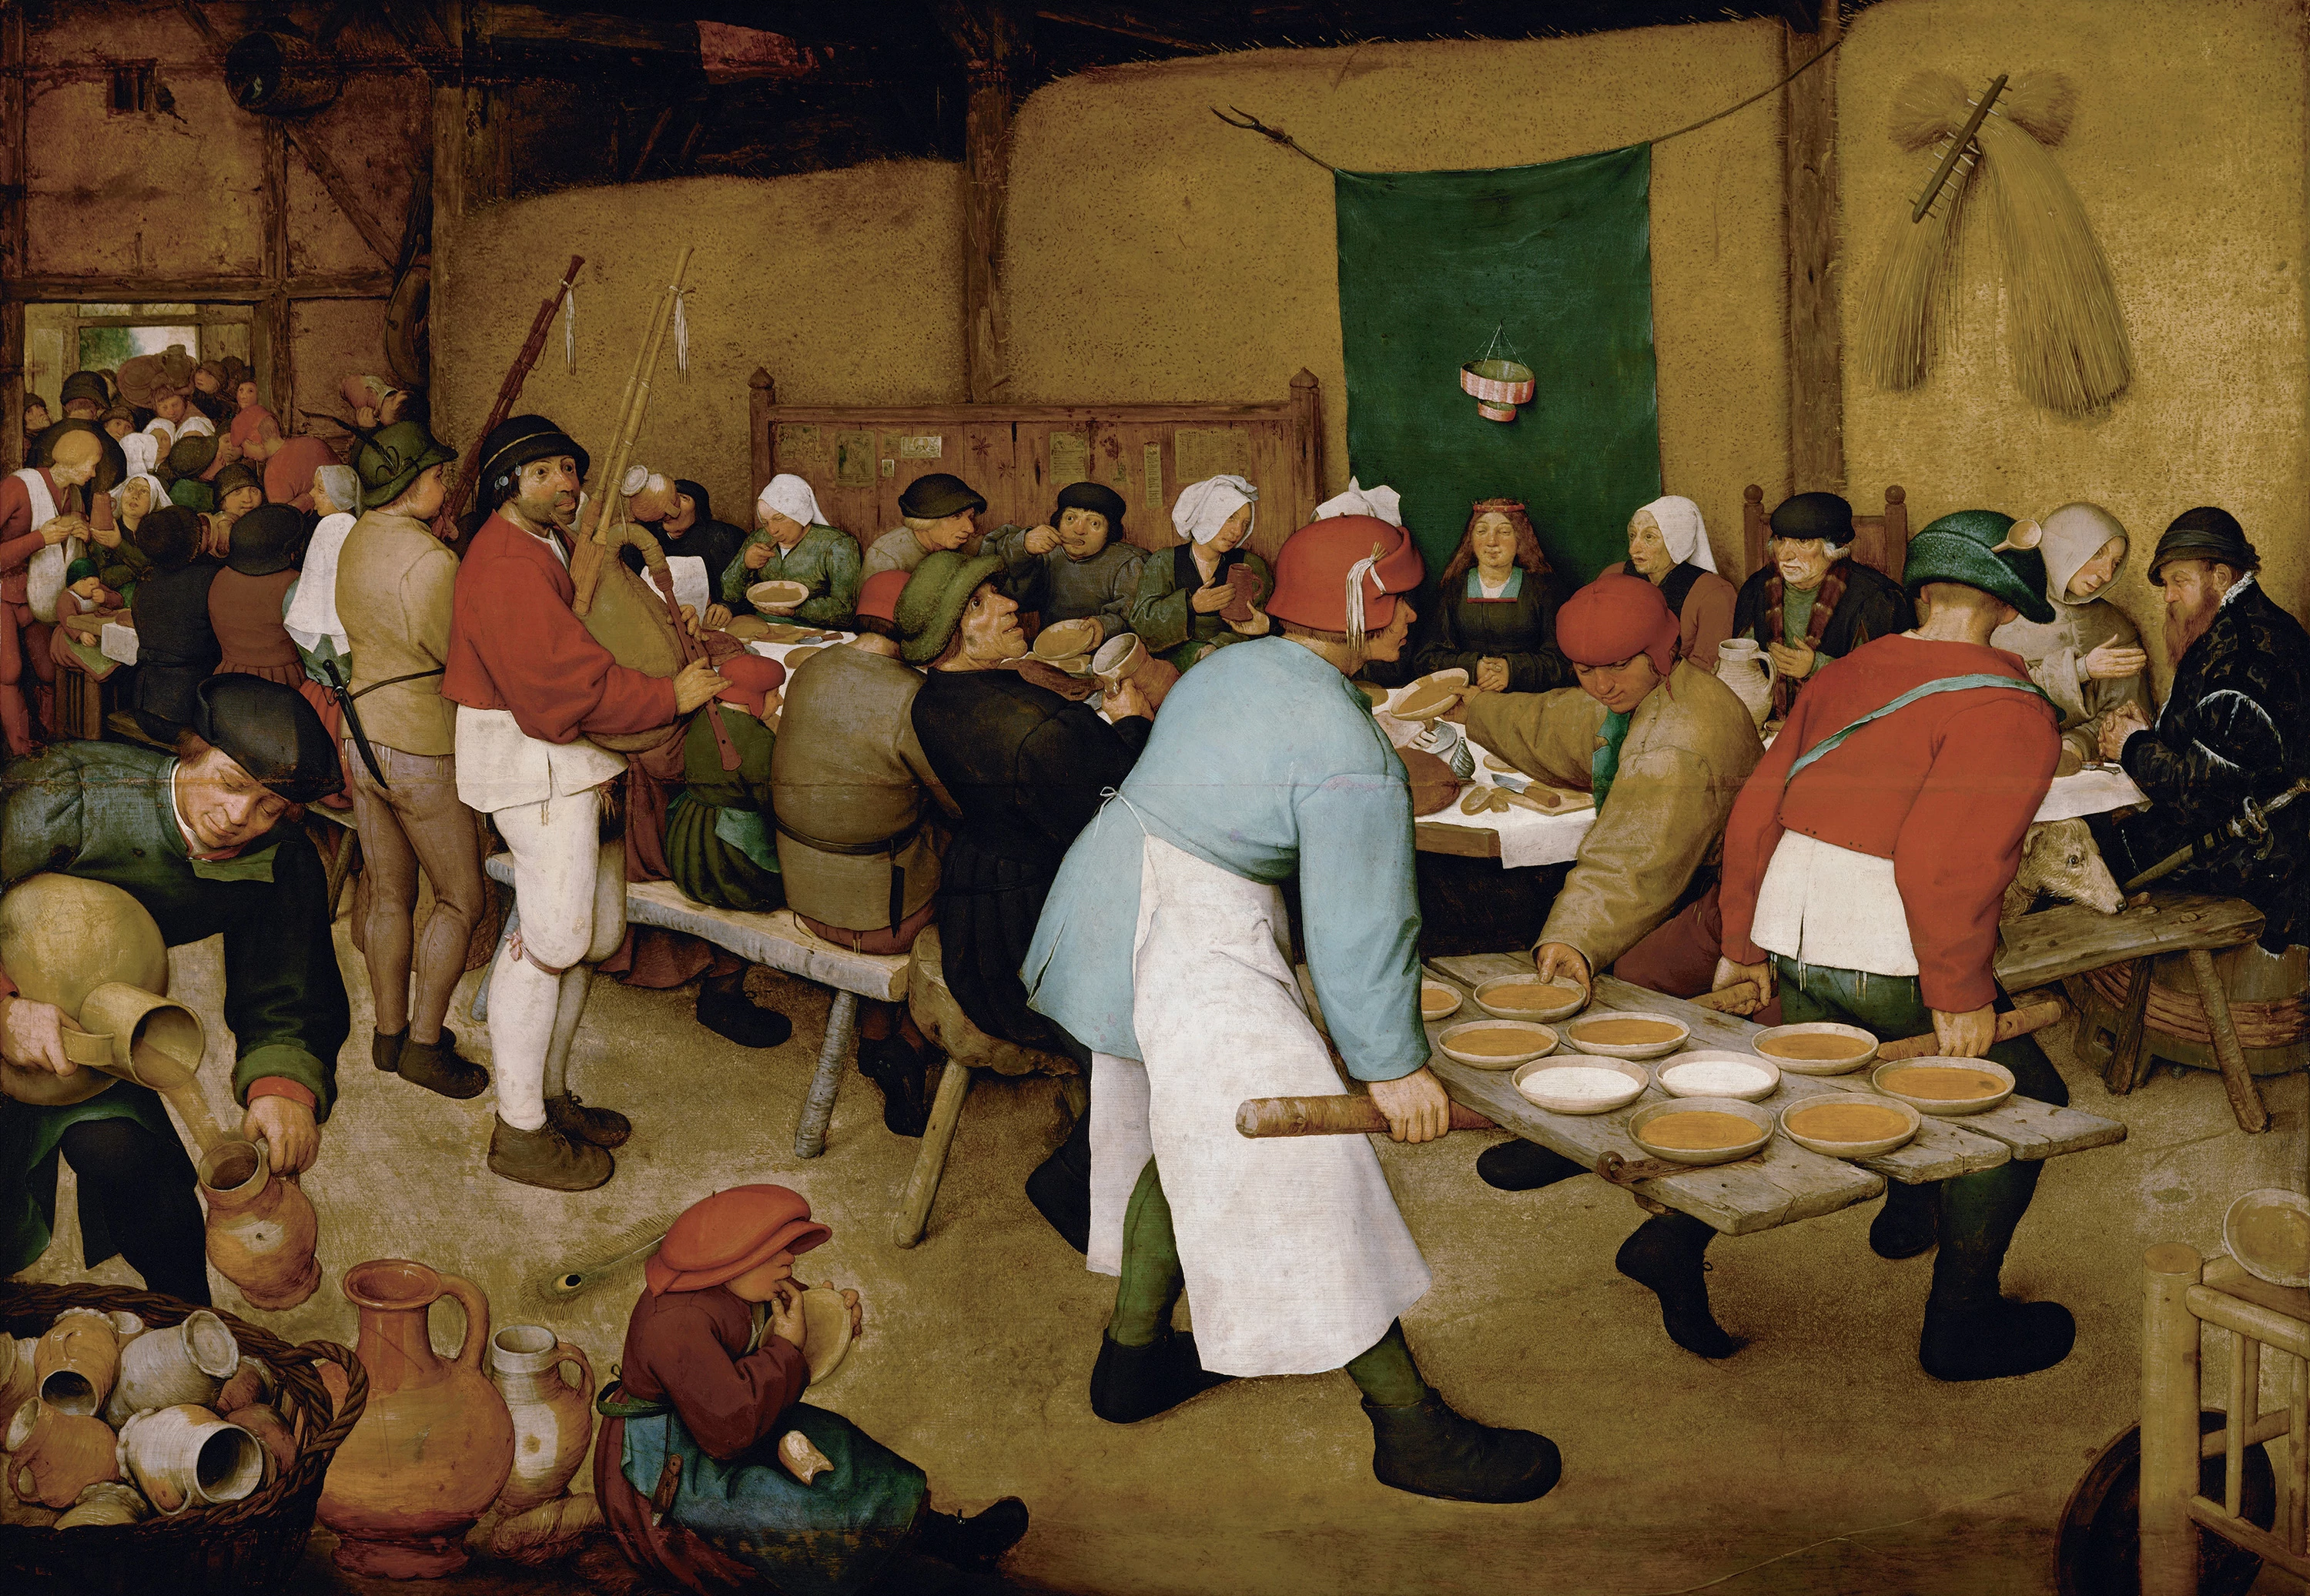 The Peasant Wedding, Pieter Bruegel the Elder